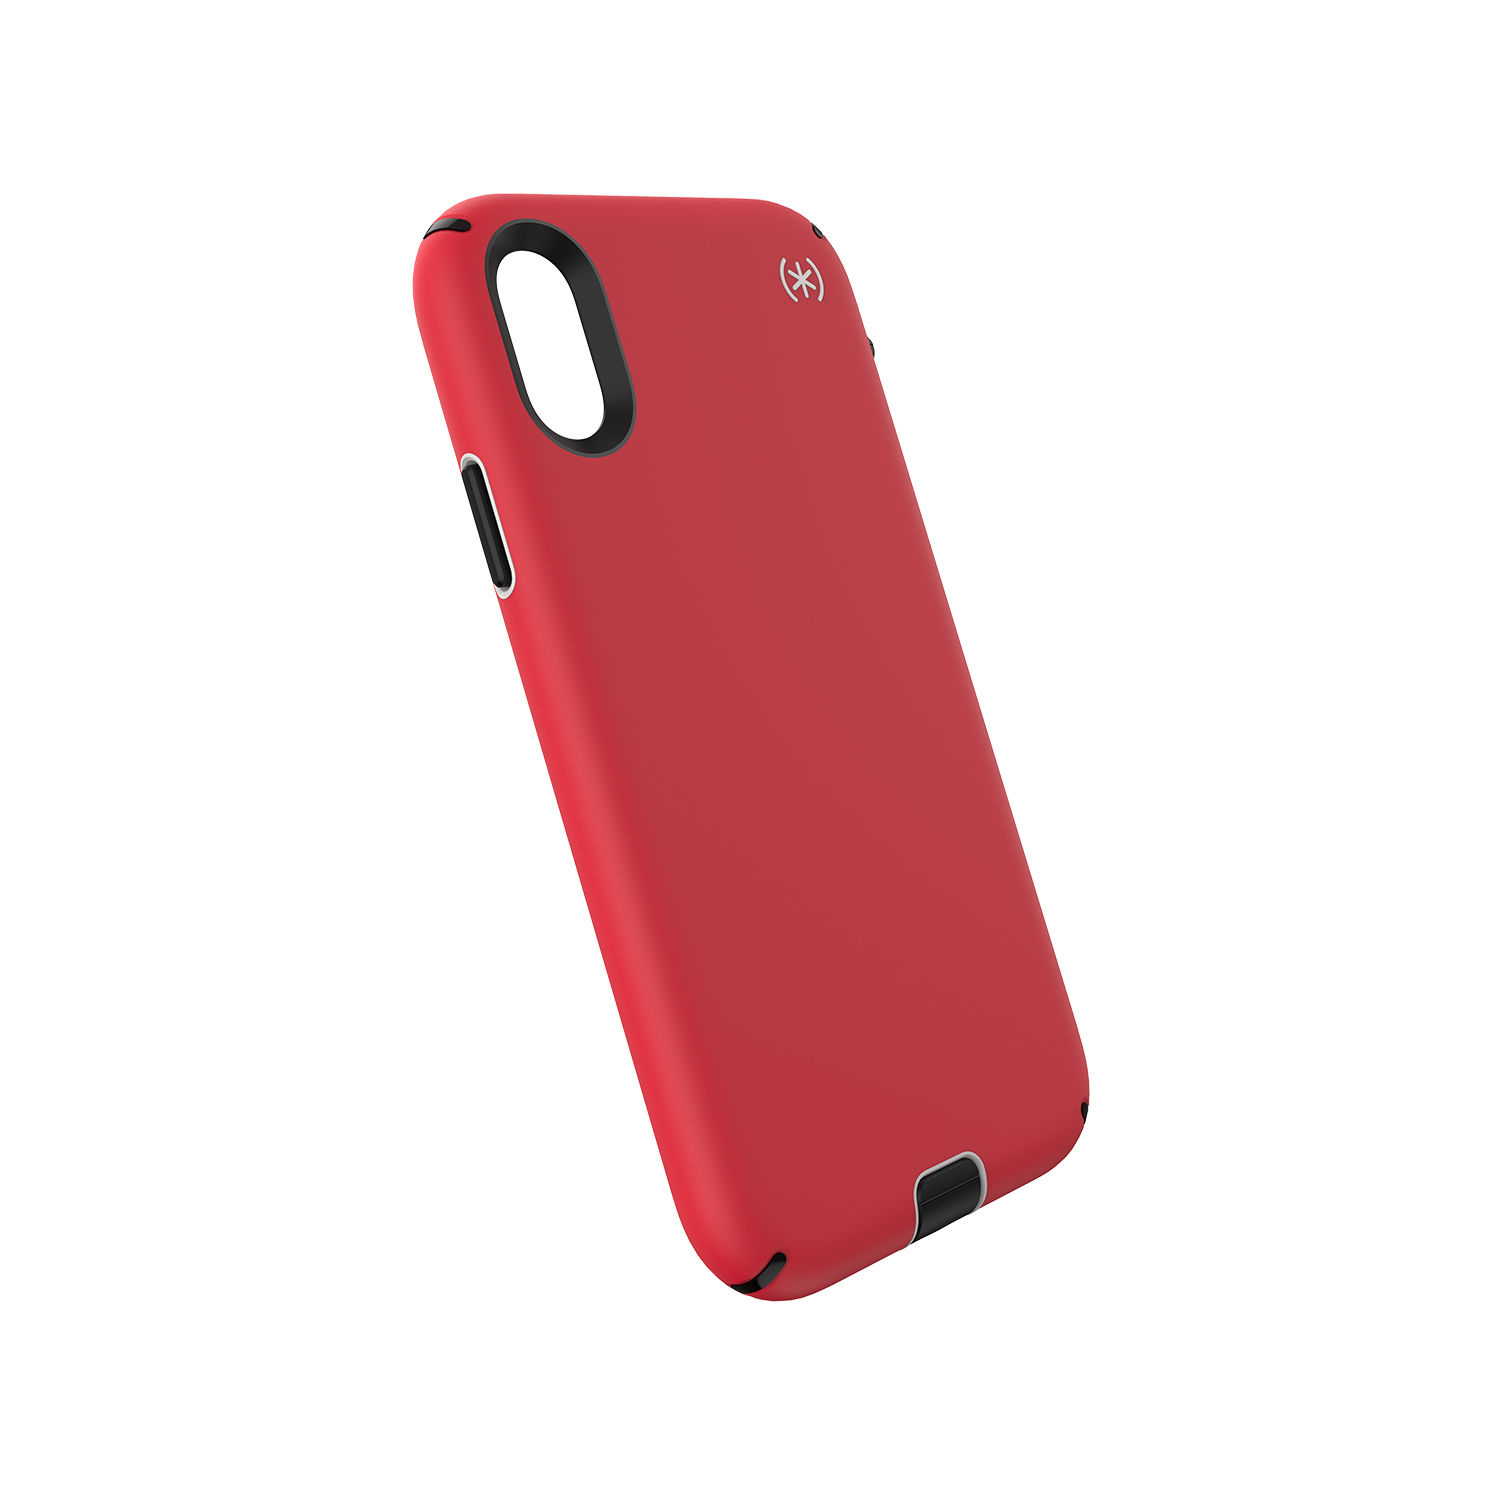 Speck Presidio Sport Case Heartrate Red/Sidewalk Grey/Black for iPhone XR